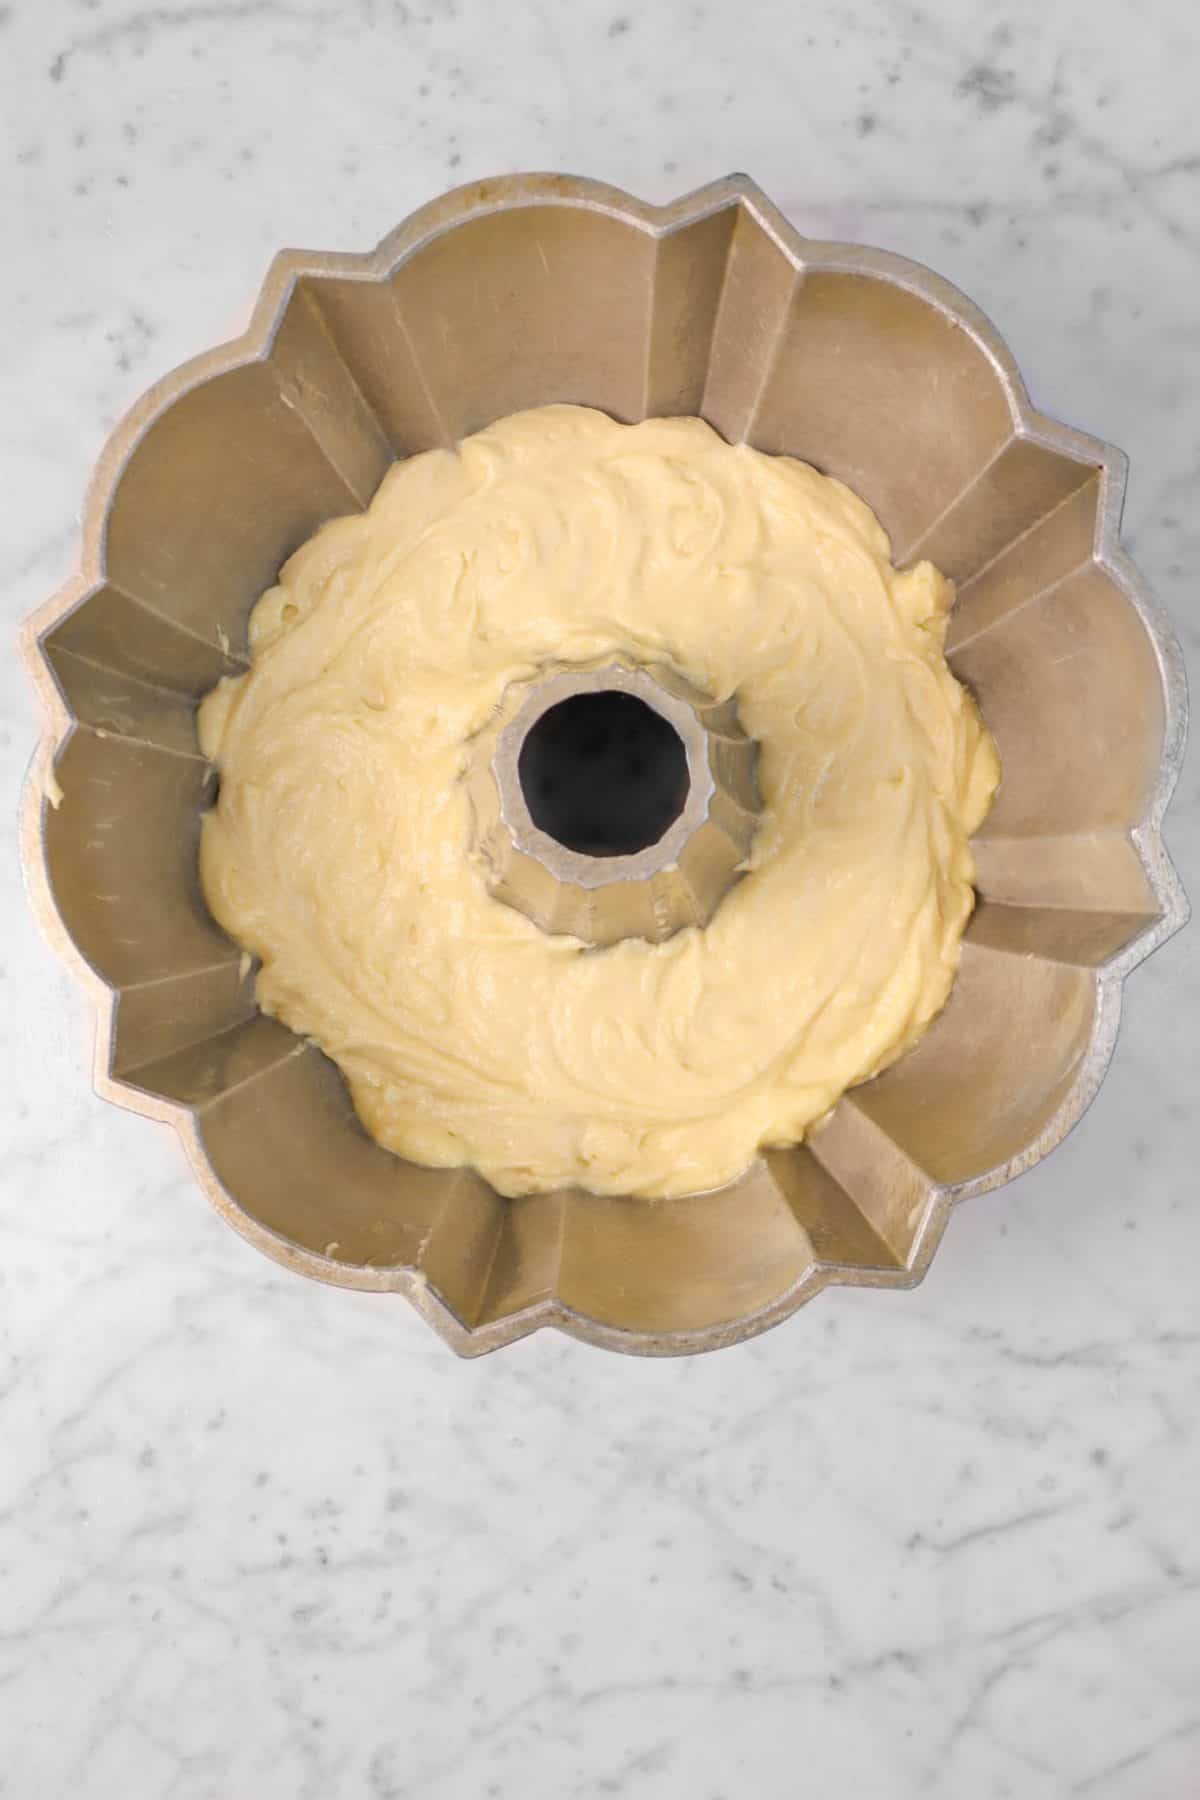 vanilla cake batter in a bundt pan